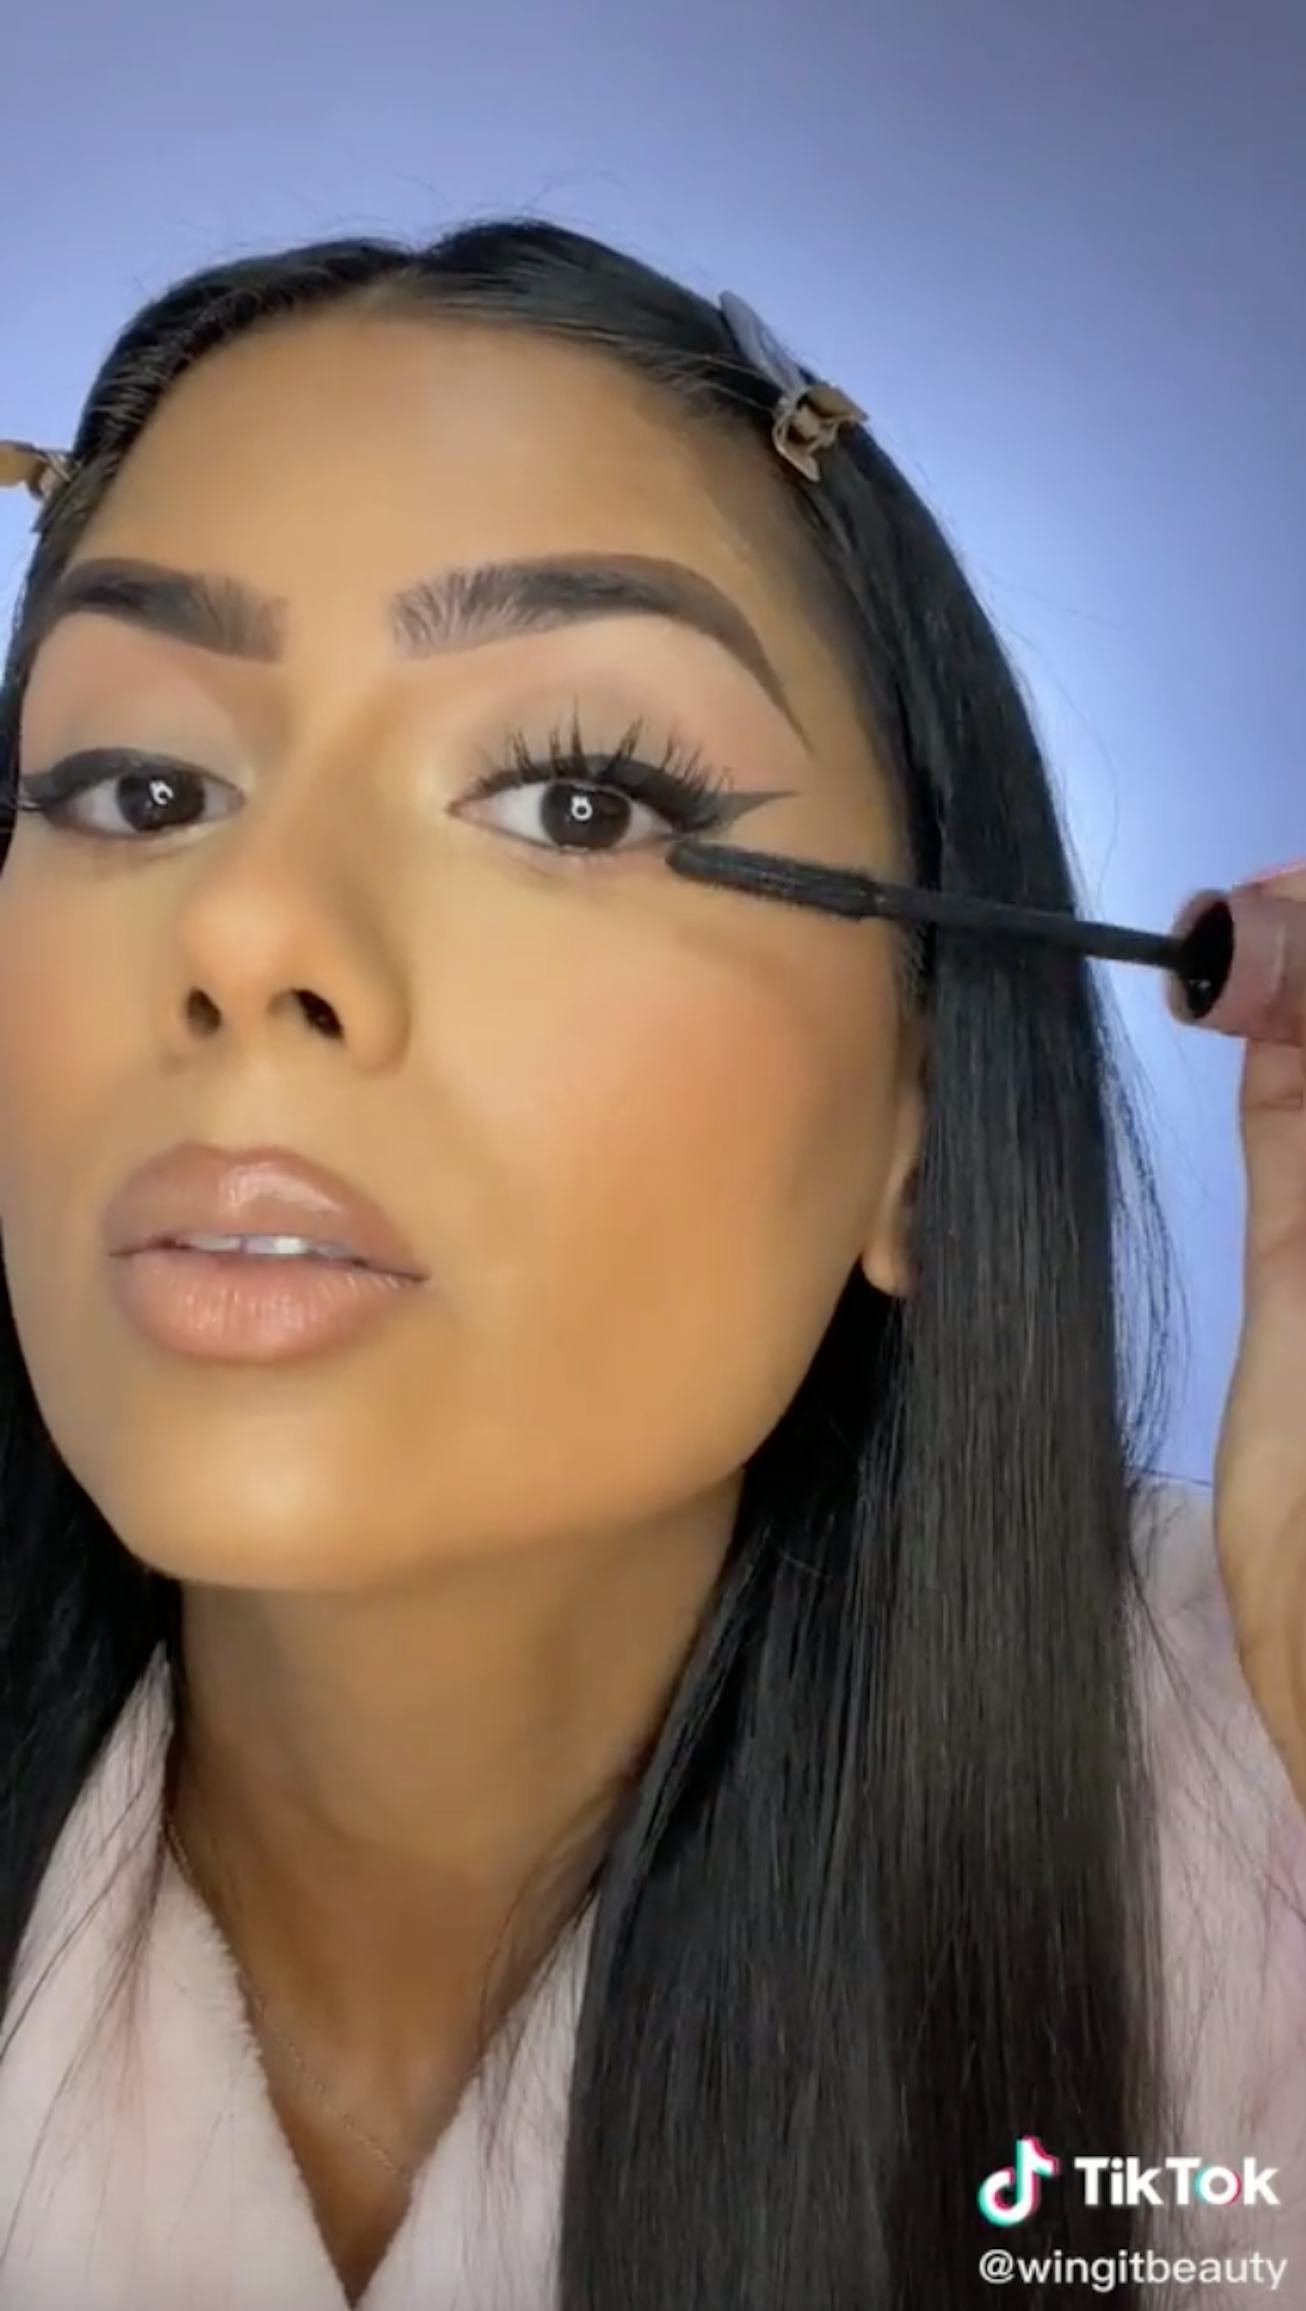 TikTok user runs wand of Maybelline Mascara through her eyelashes 